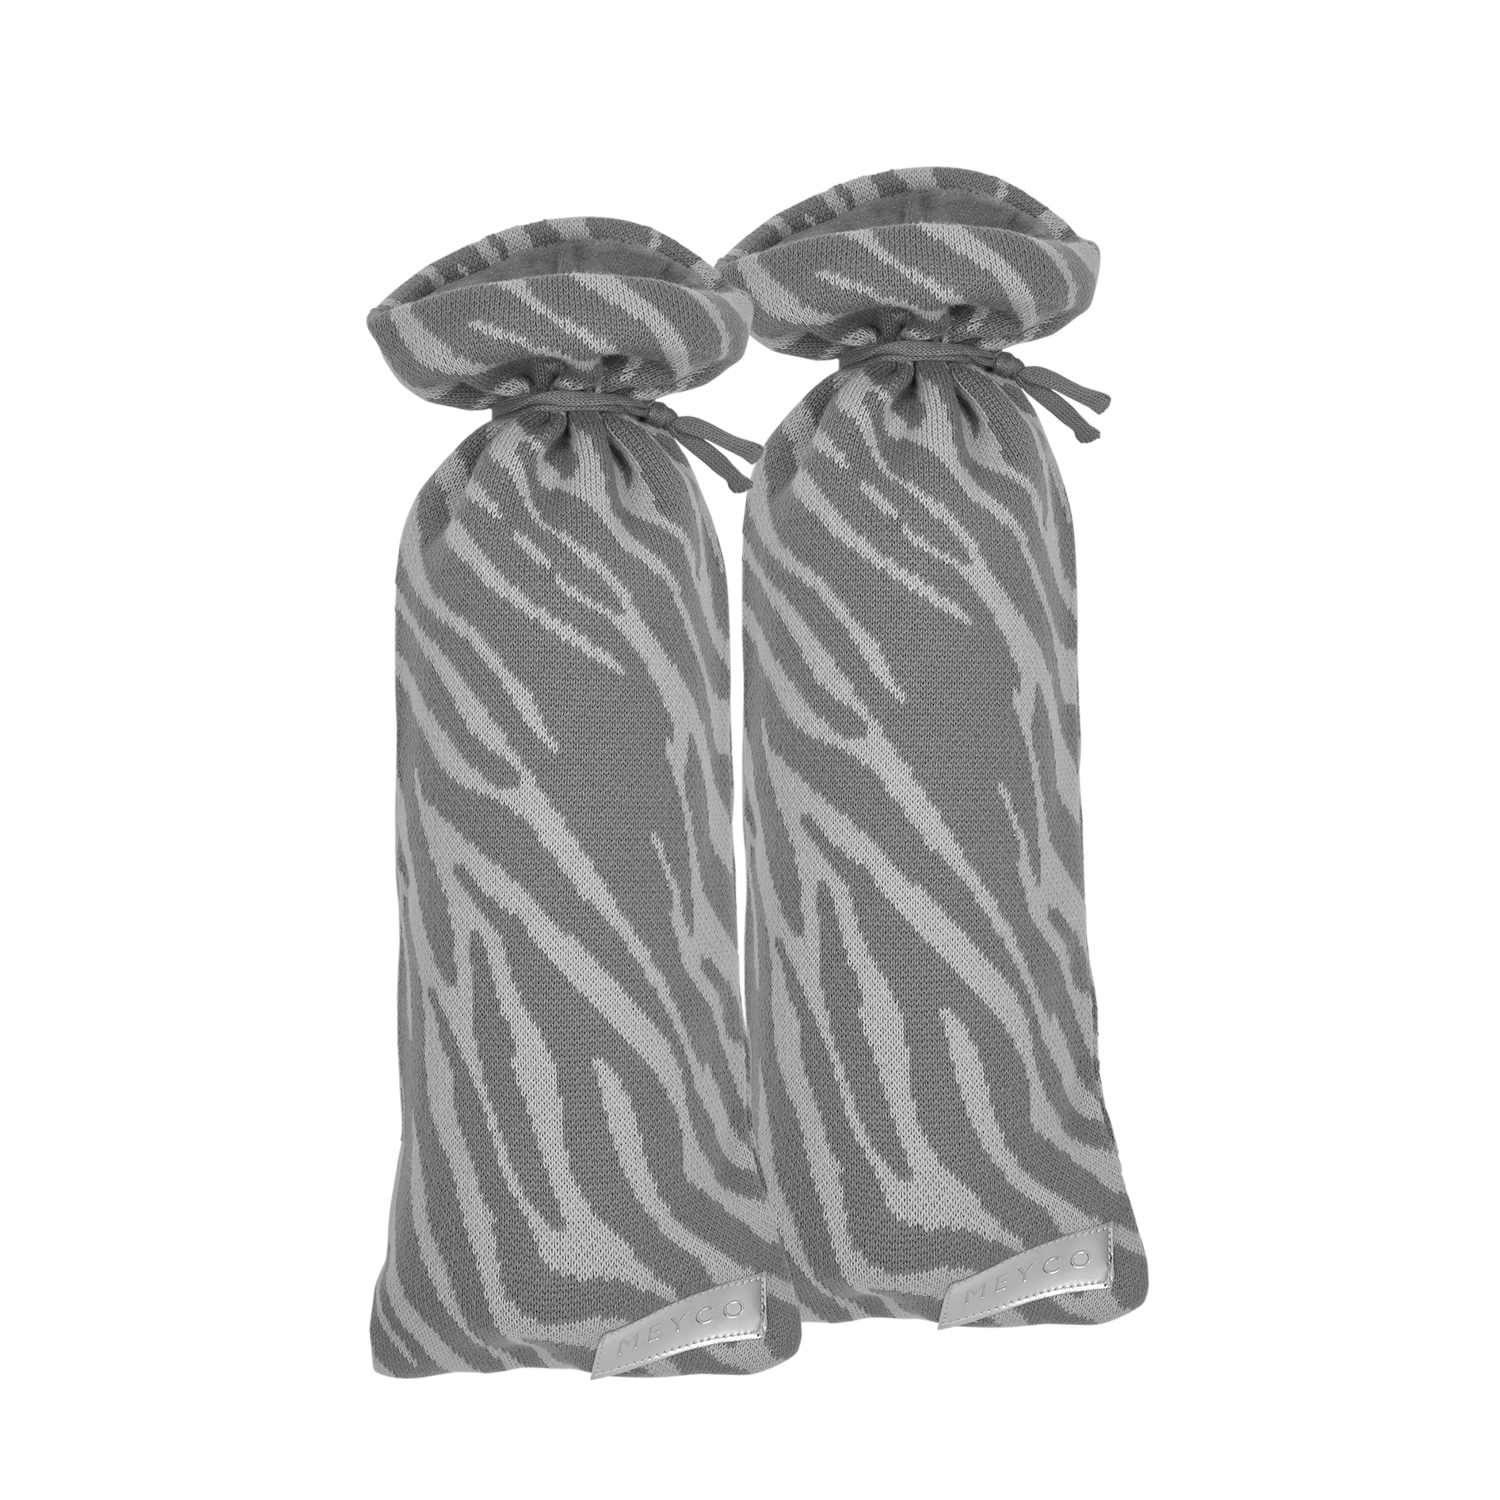 Hot water bottle cover 2-pack Zebra - grey